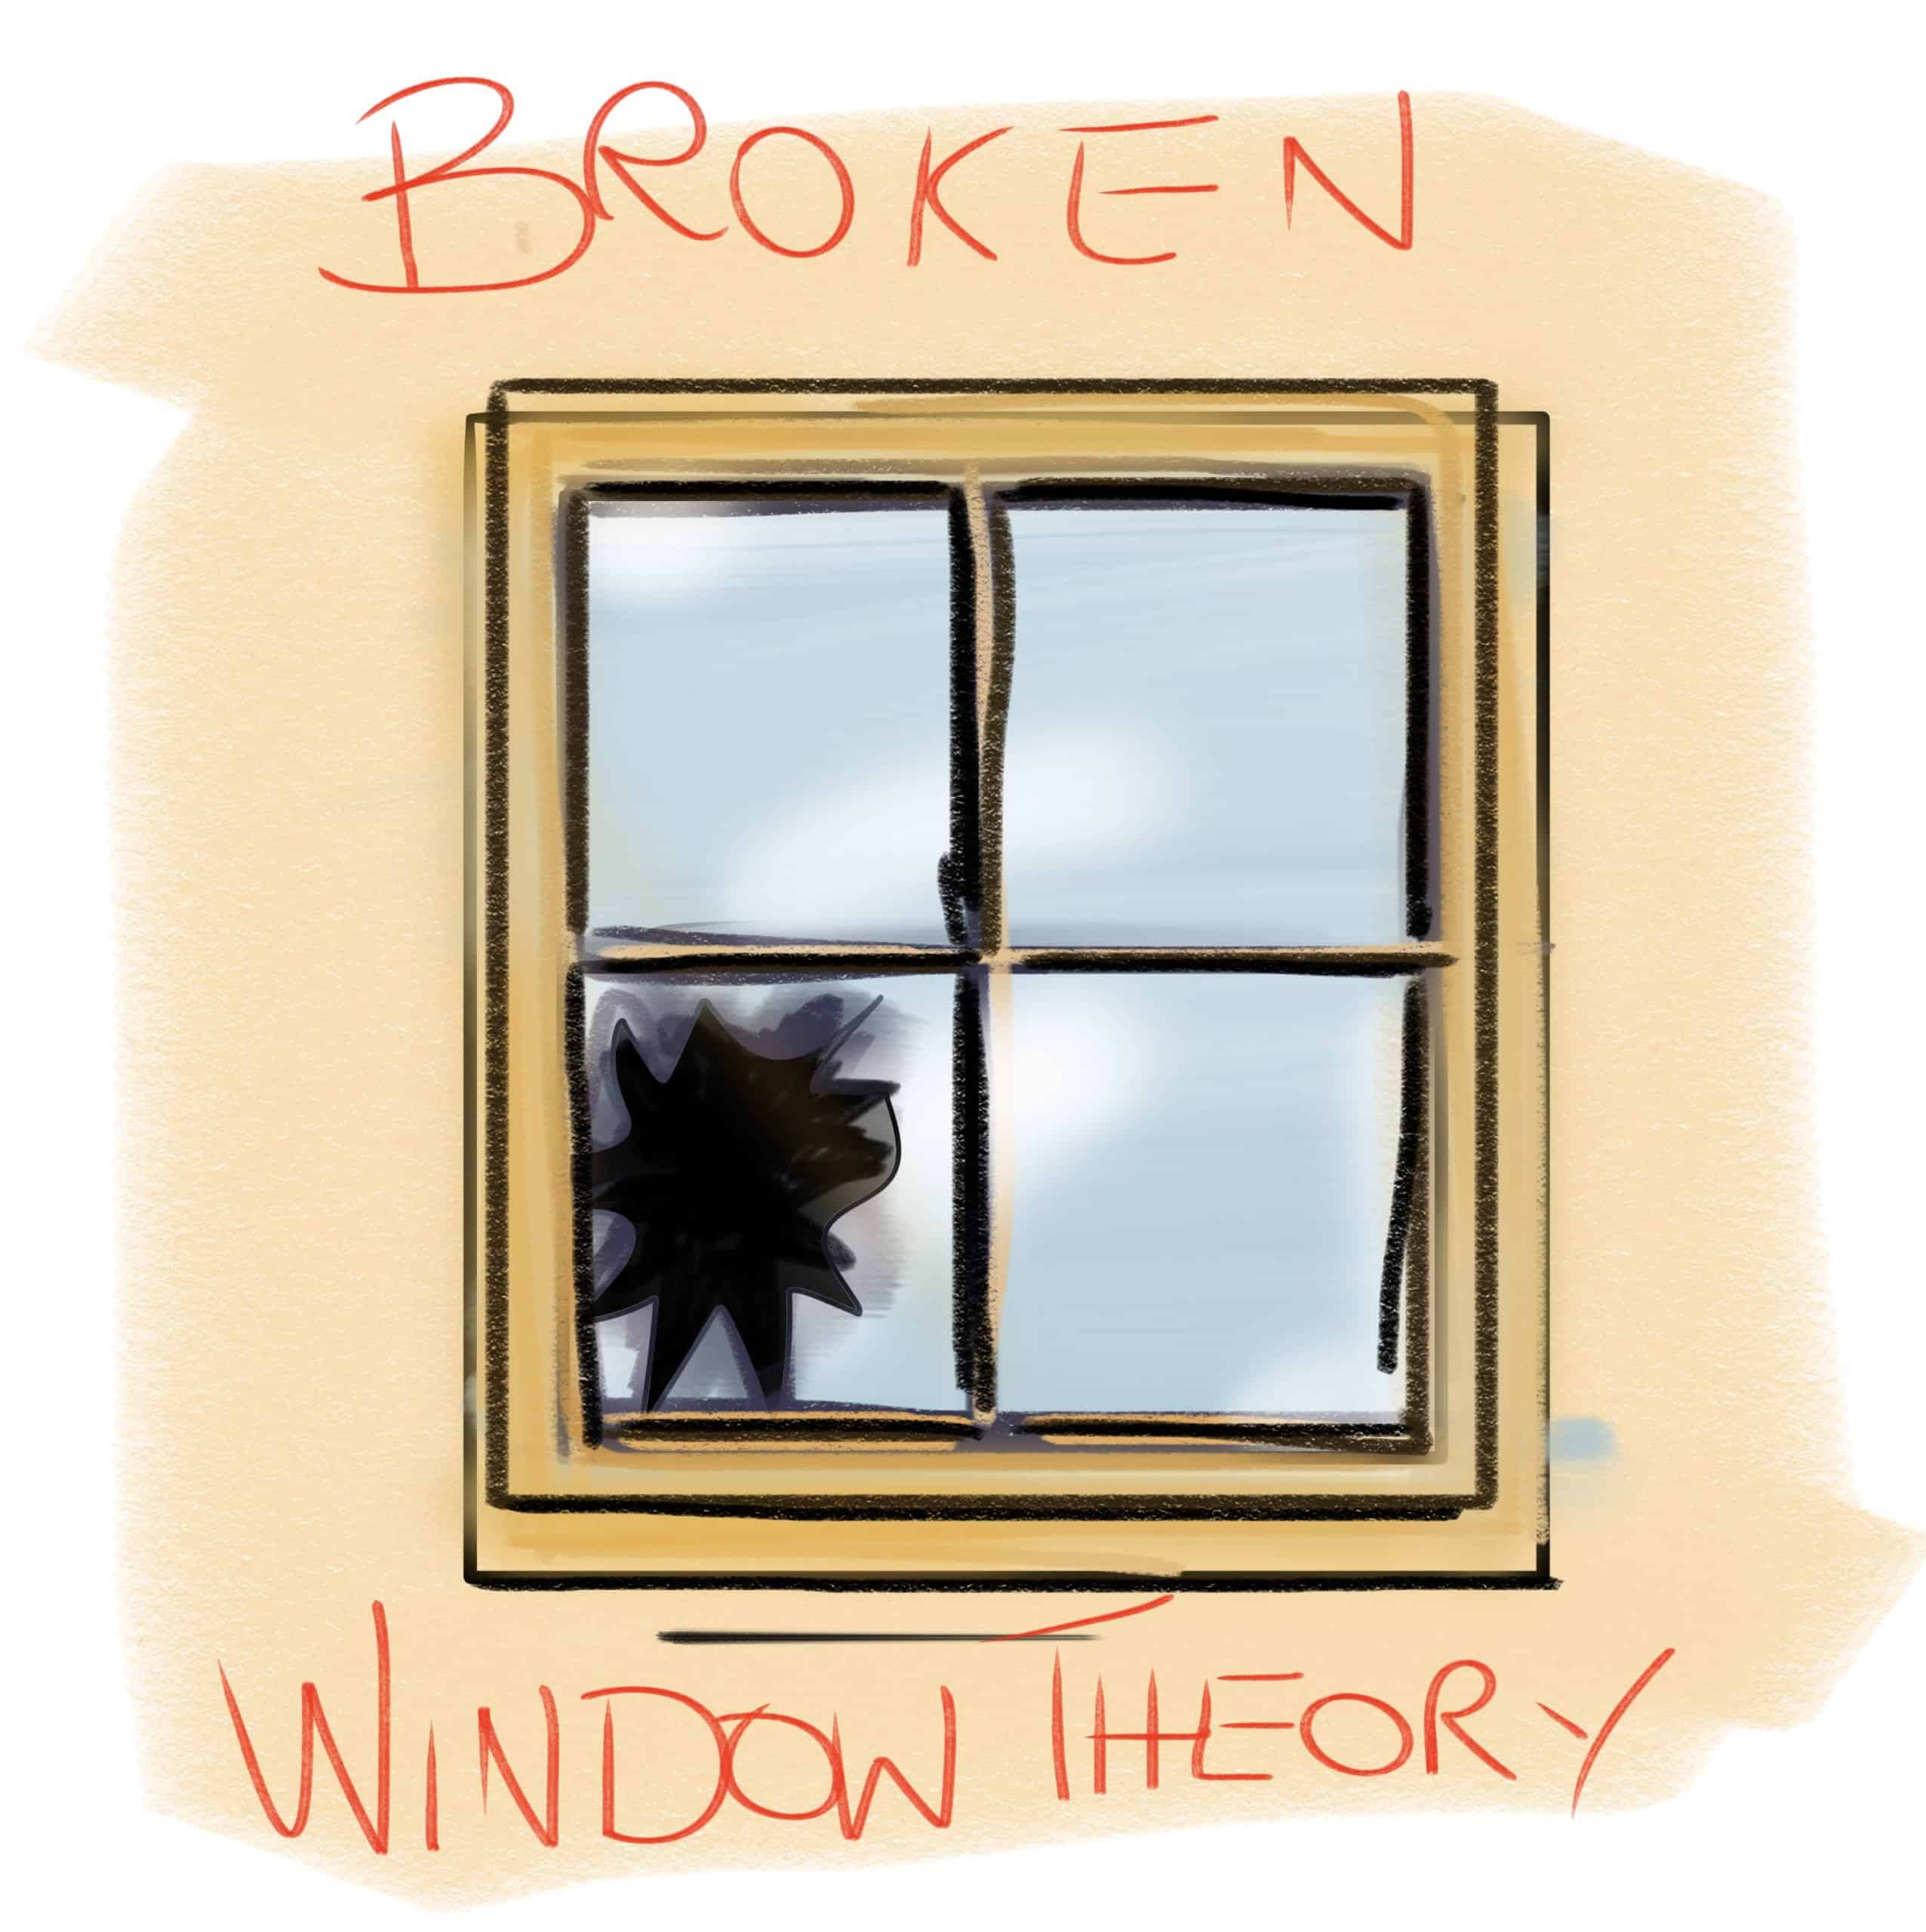 broken window theory statistics